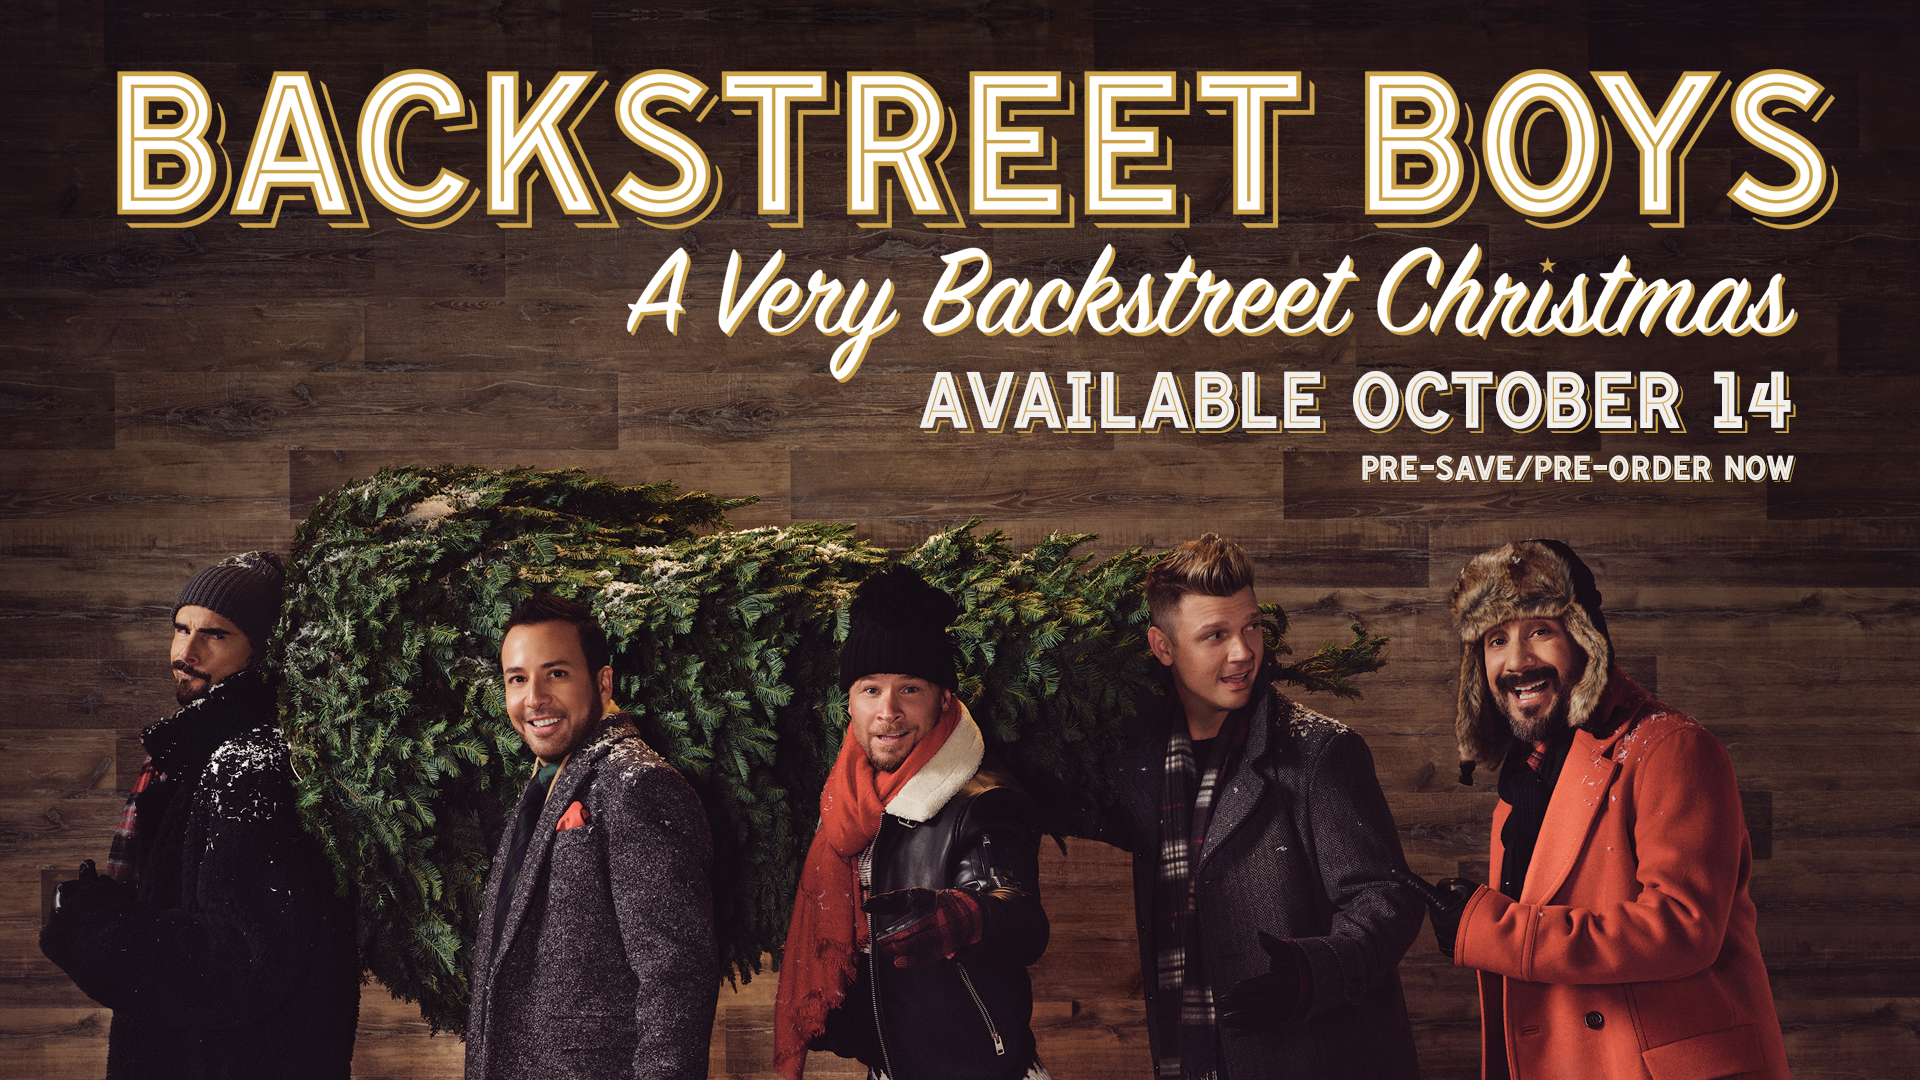 A VEry Backstreet Christmas Available Oct 14